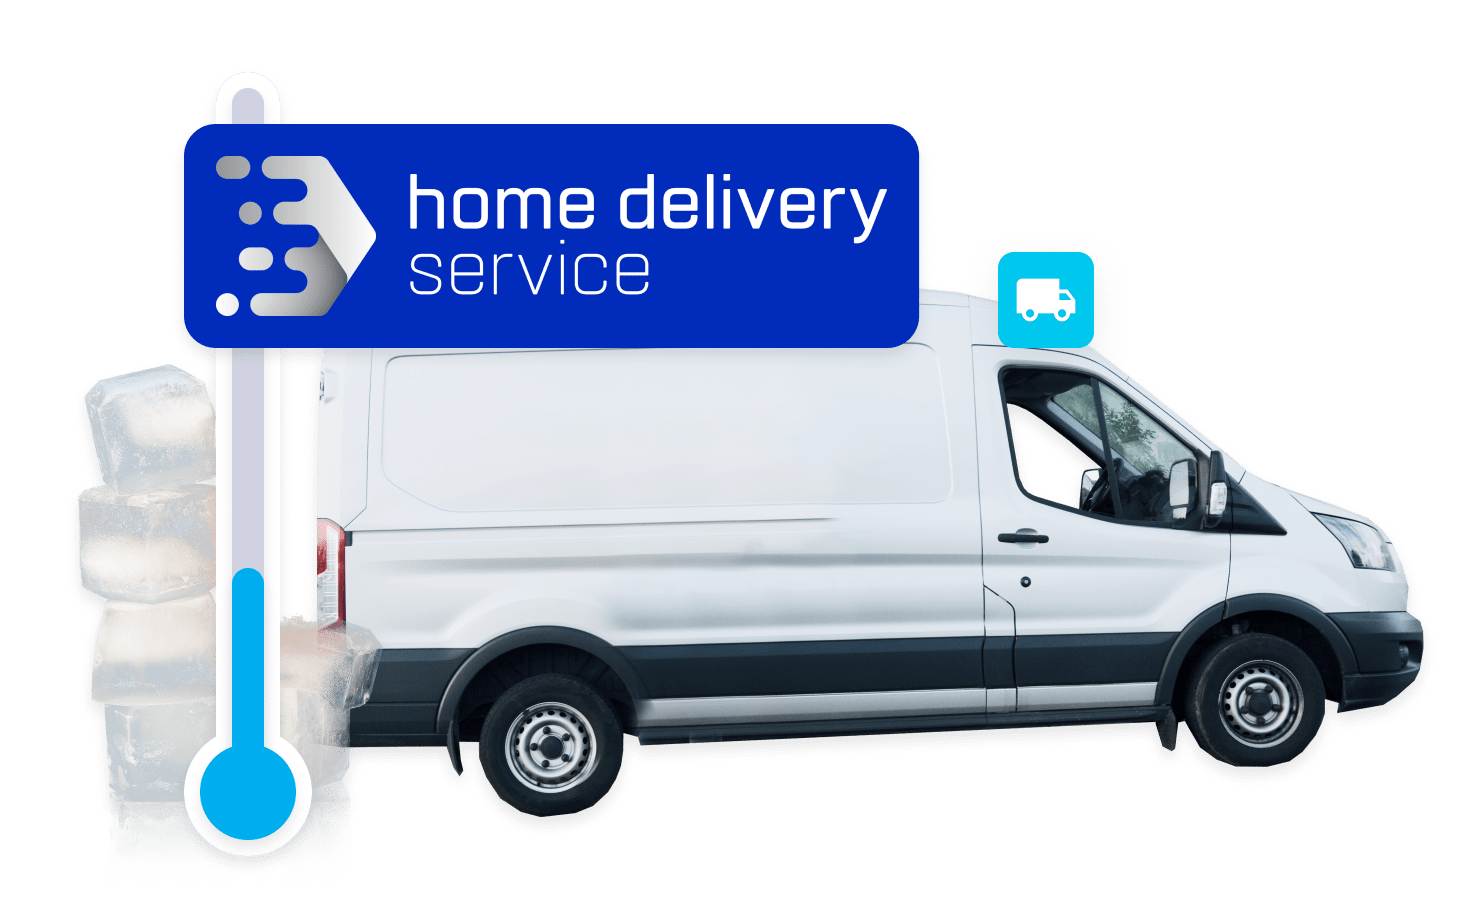 module home delivery service